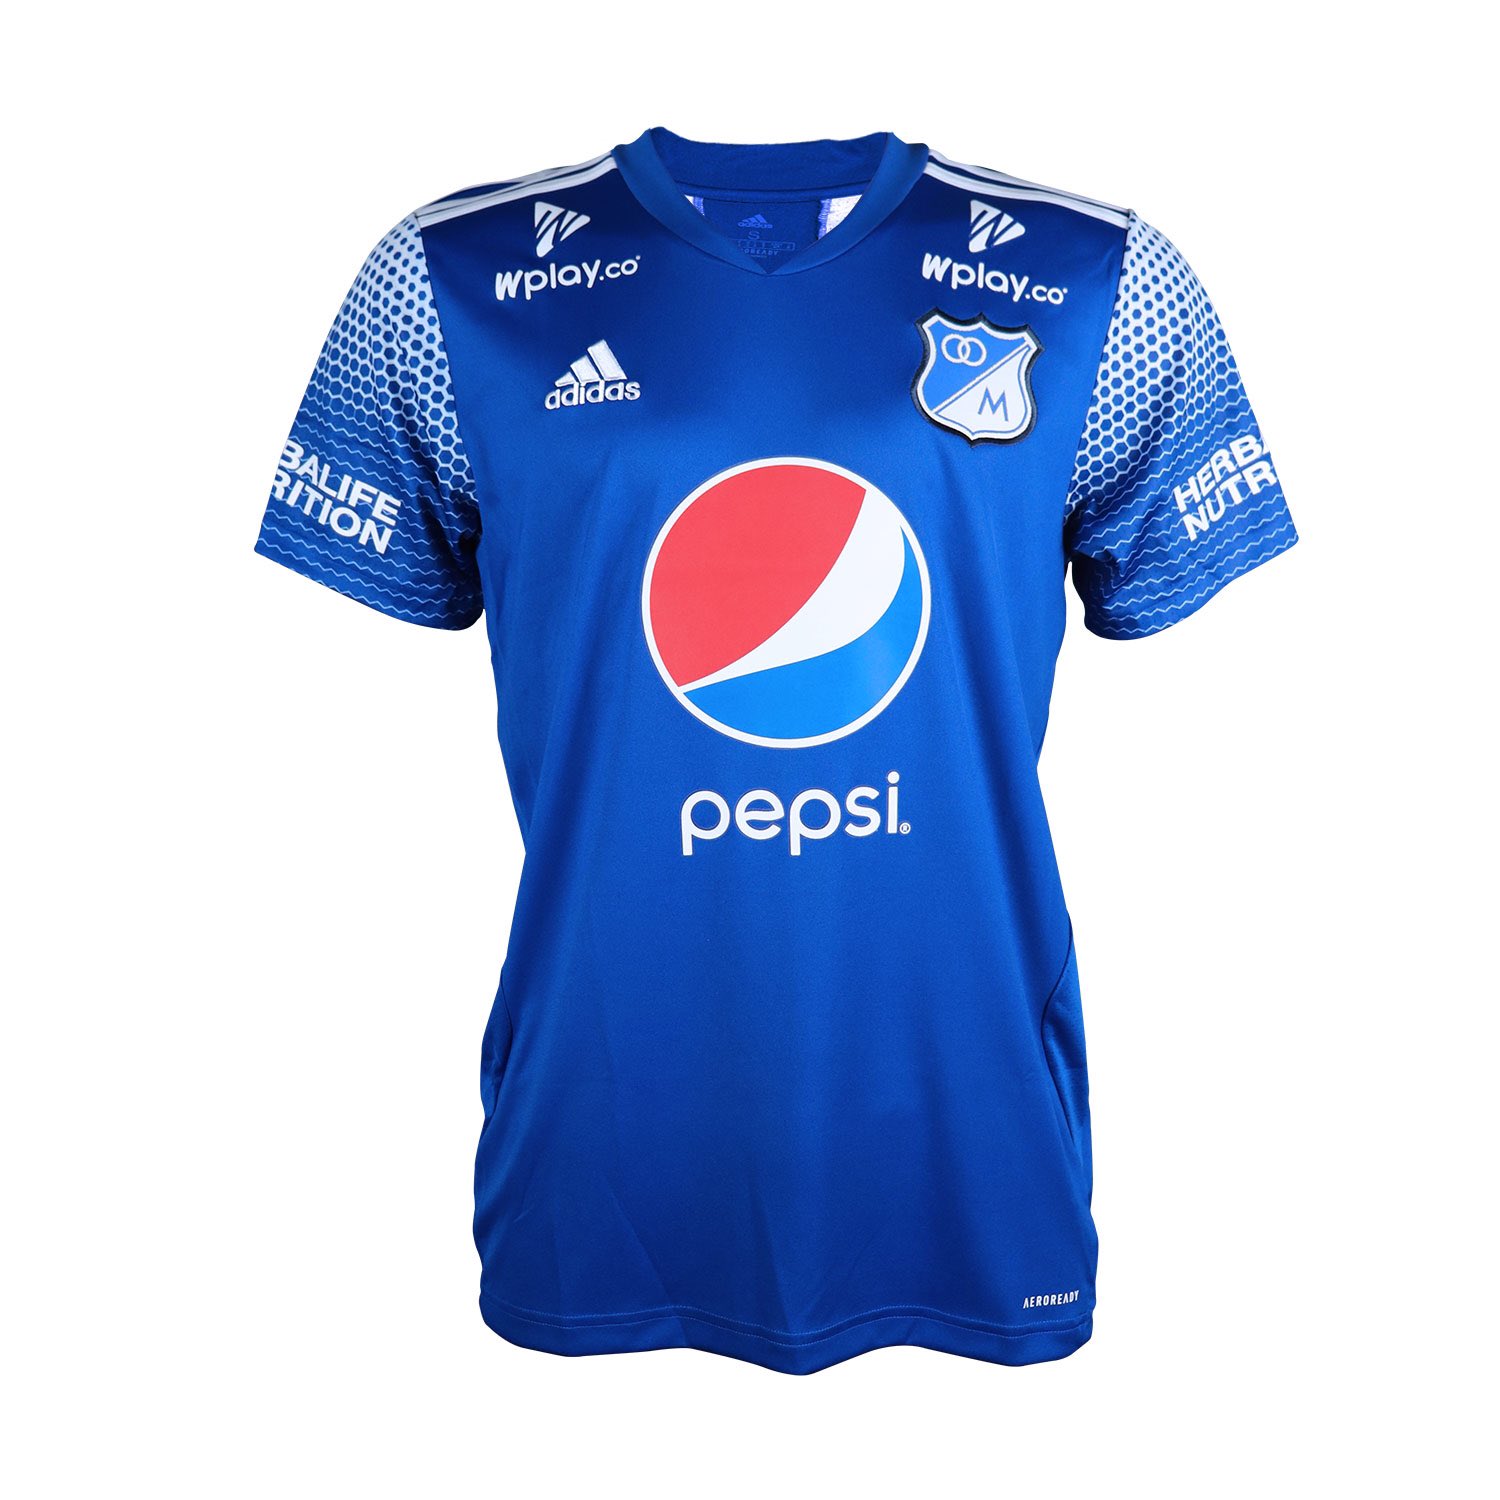 Millonarios De Colombia auf Twitter: „DIA SIN IVA Camiseta Oficial Hombre  Adidas 2020 $167,983 Disponible en la página web de la tienda de  Millonarios https://t.co/AvQgvs6i8U“ / Twitter